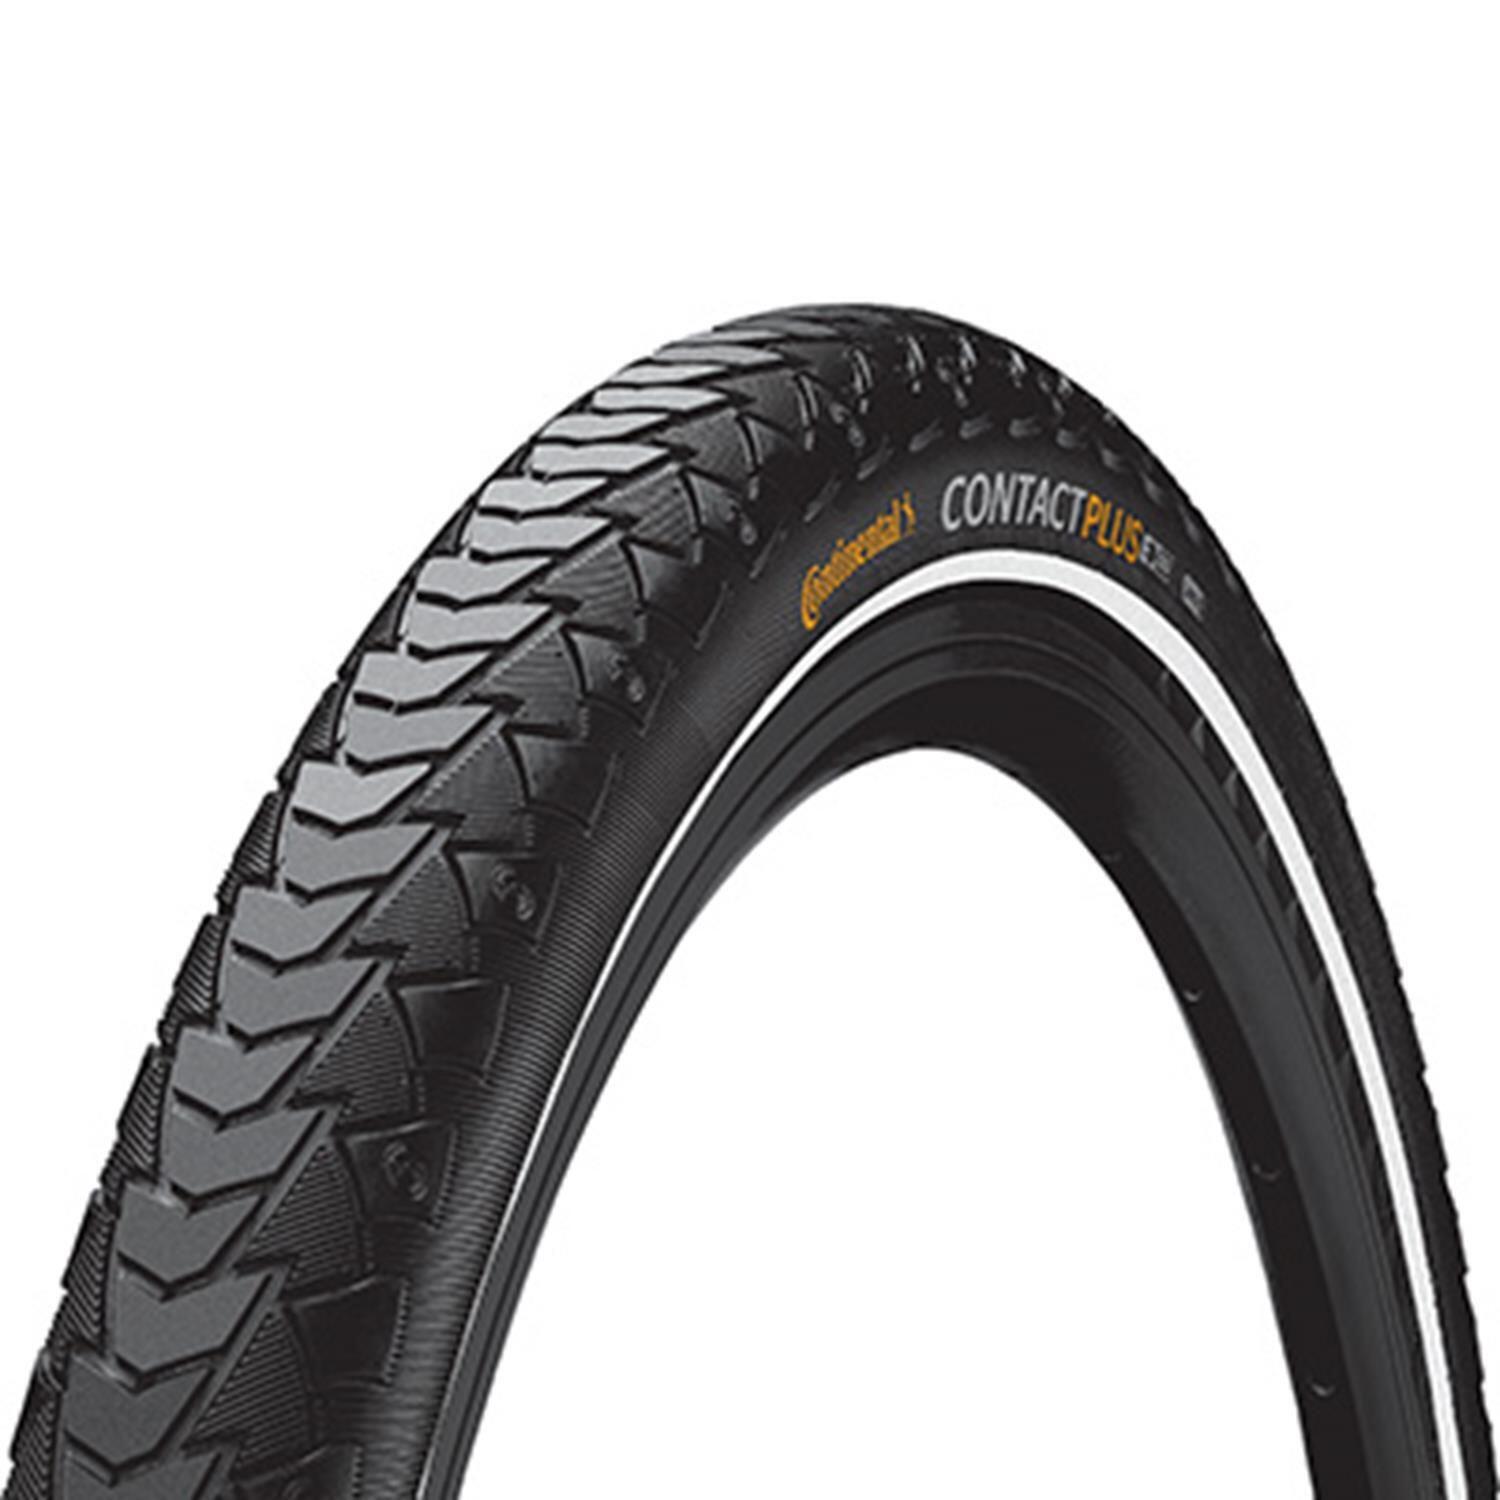 CONTACT Plus Reflex Tyre-Wire Bead Urban Black/Black Reflex 700 X 35C 1/5